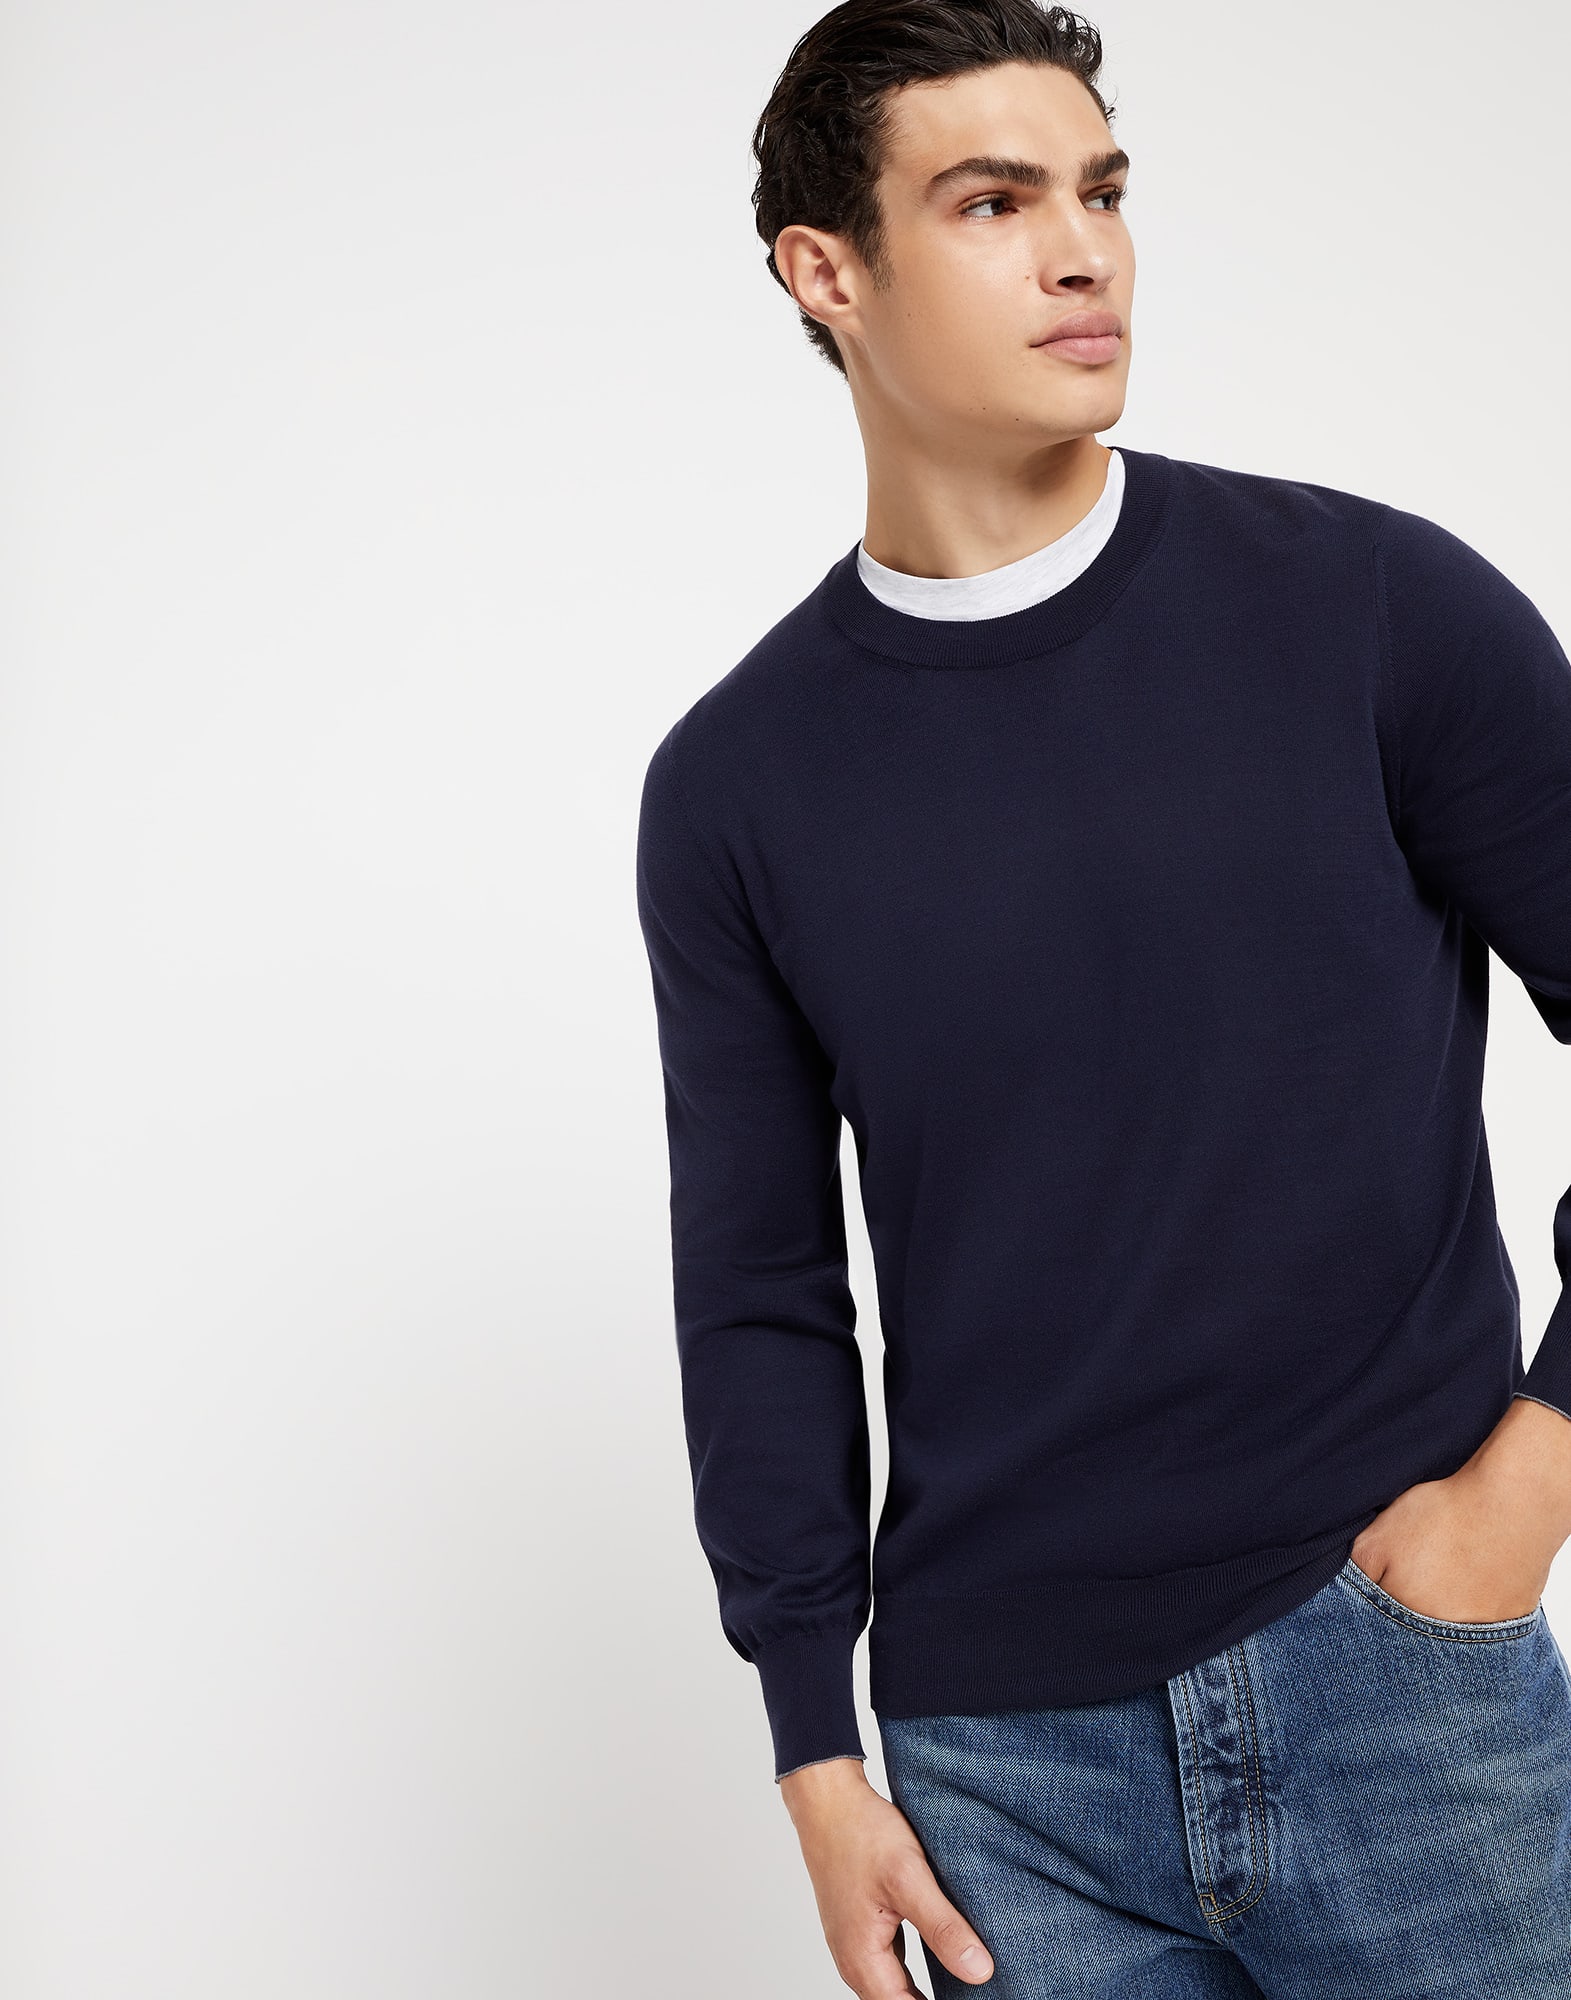 Lightweight sweater